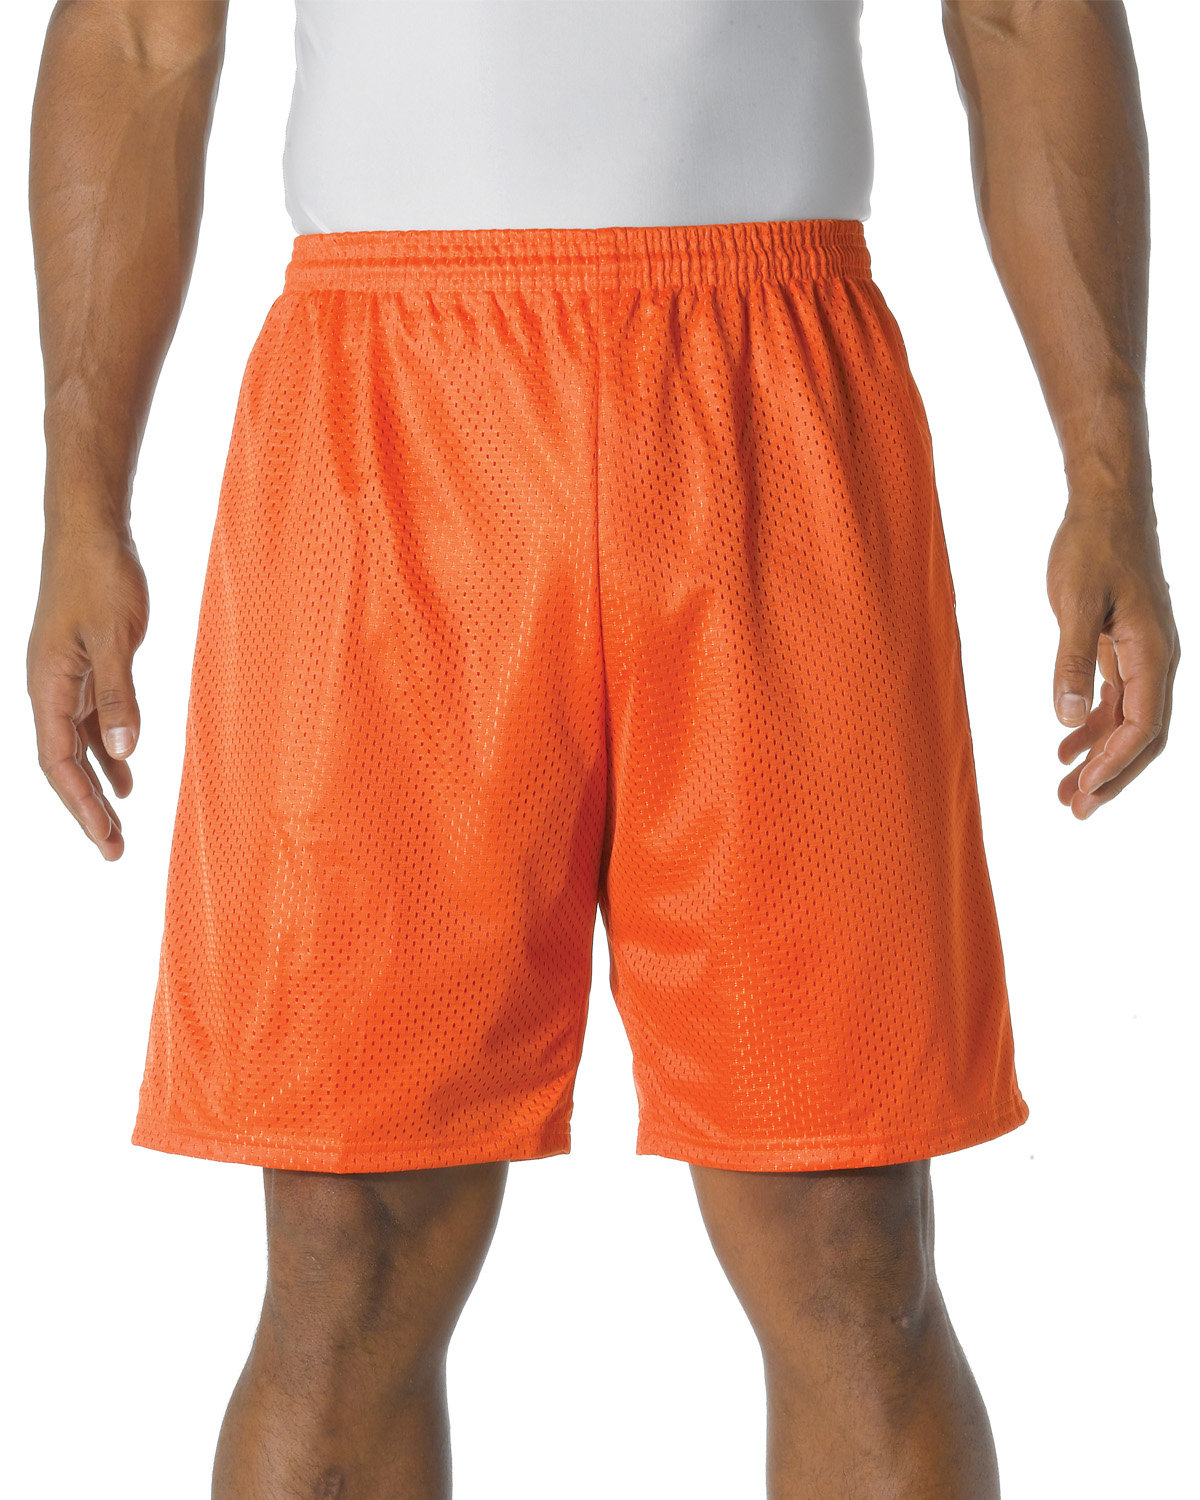 A4 Adult Tricot Mesh Short athletic orange 